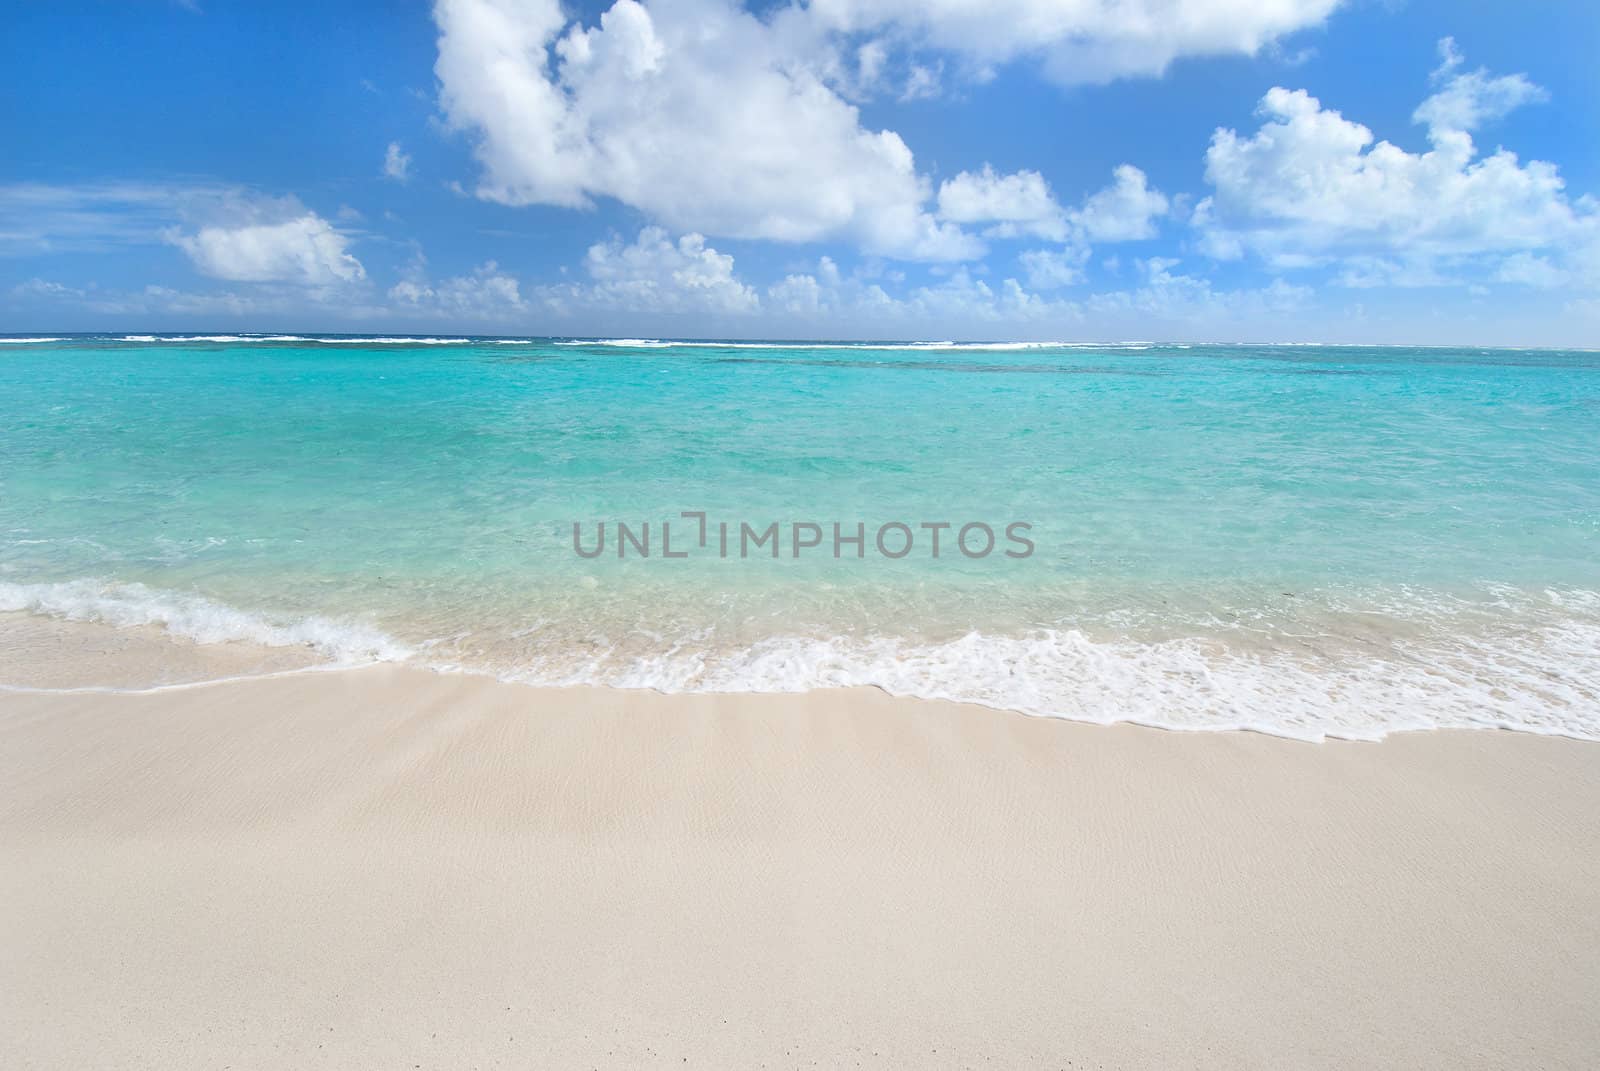 Caribbean aqua waters and blue sky of the British Virgin Islands